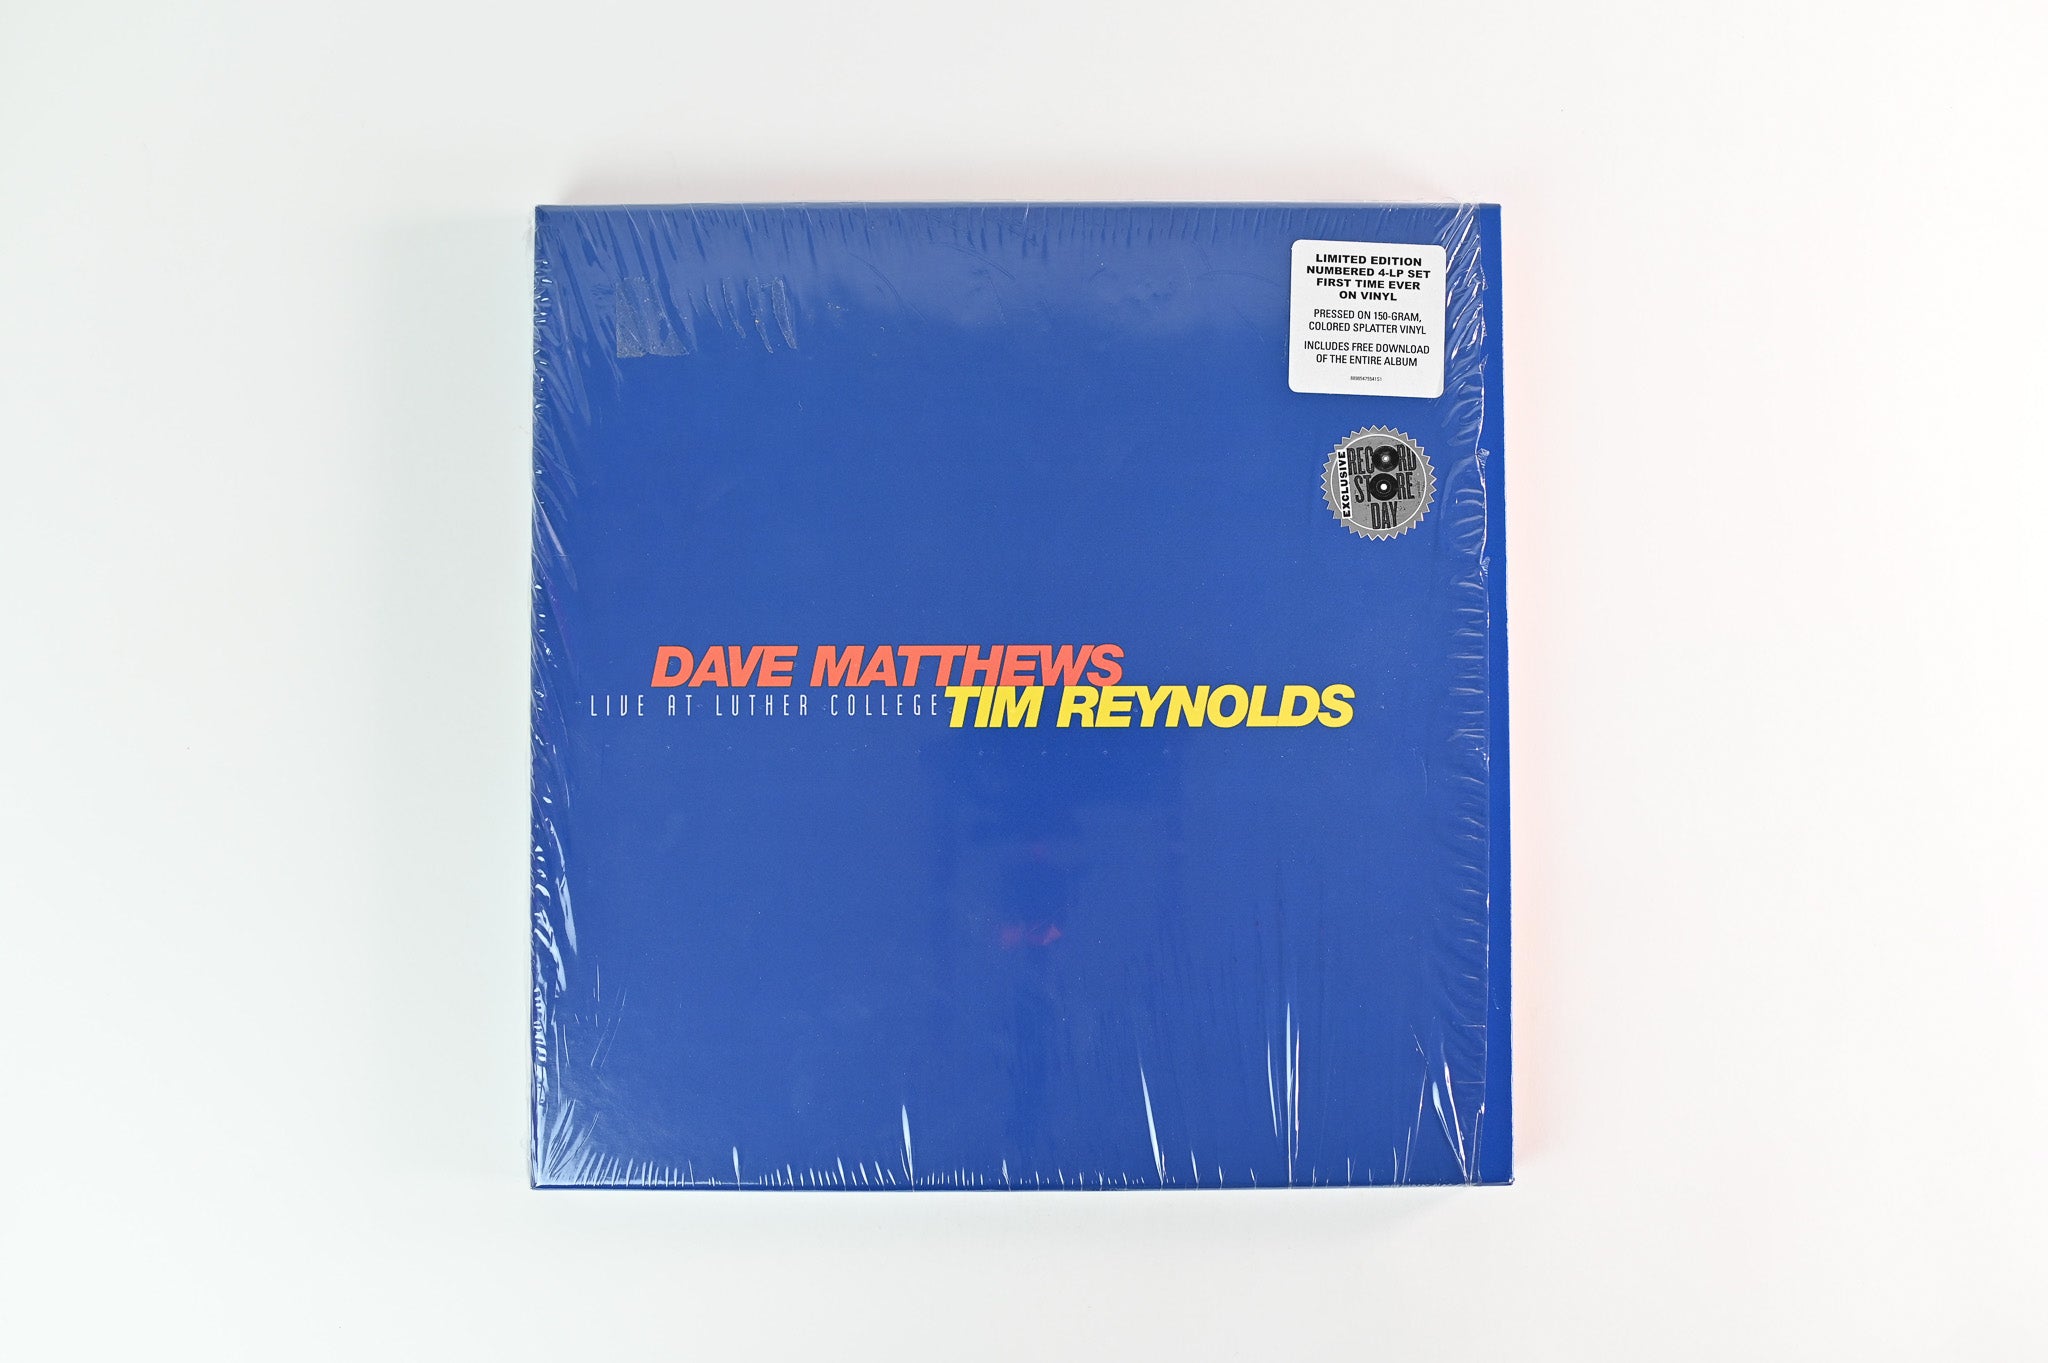 Dave Matthews & Tim Reynolds - Live At Luther College on Bama Rags Ltd RSD Splatter Reissue